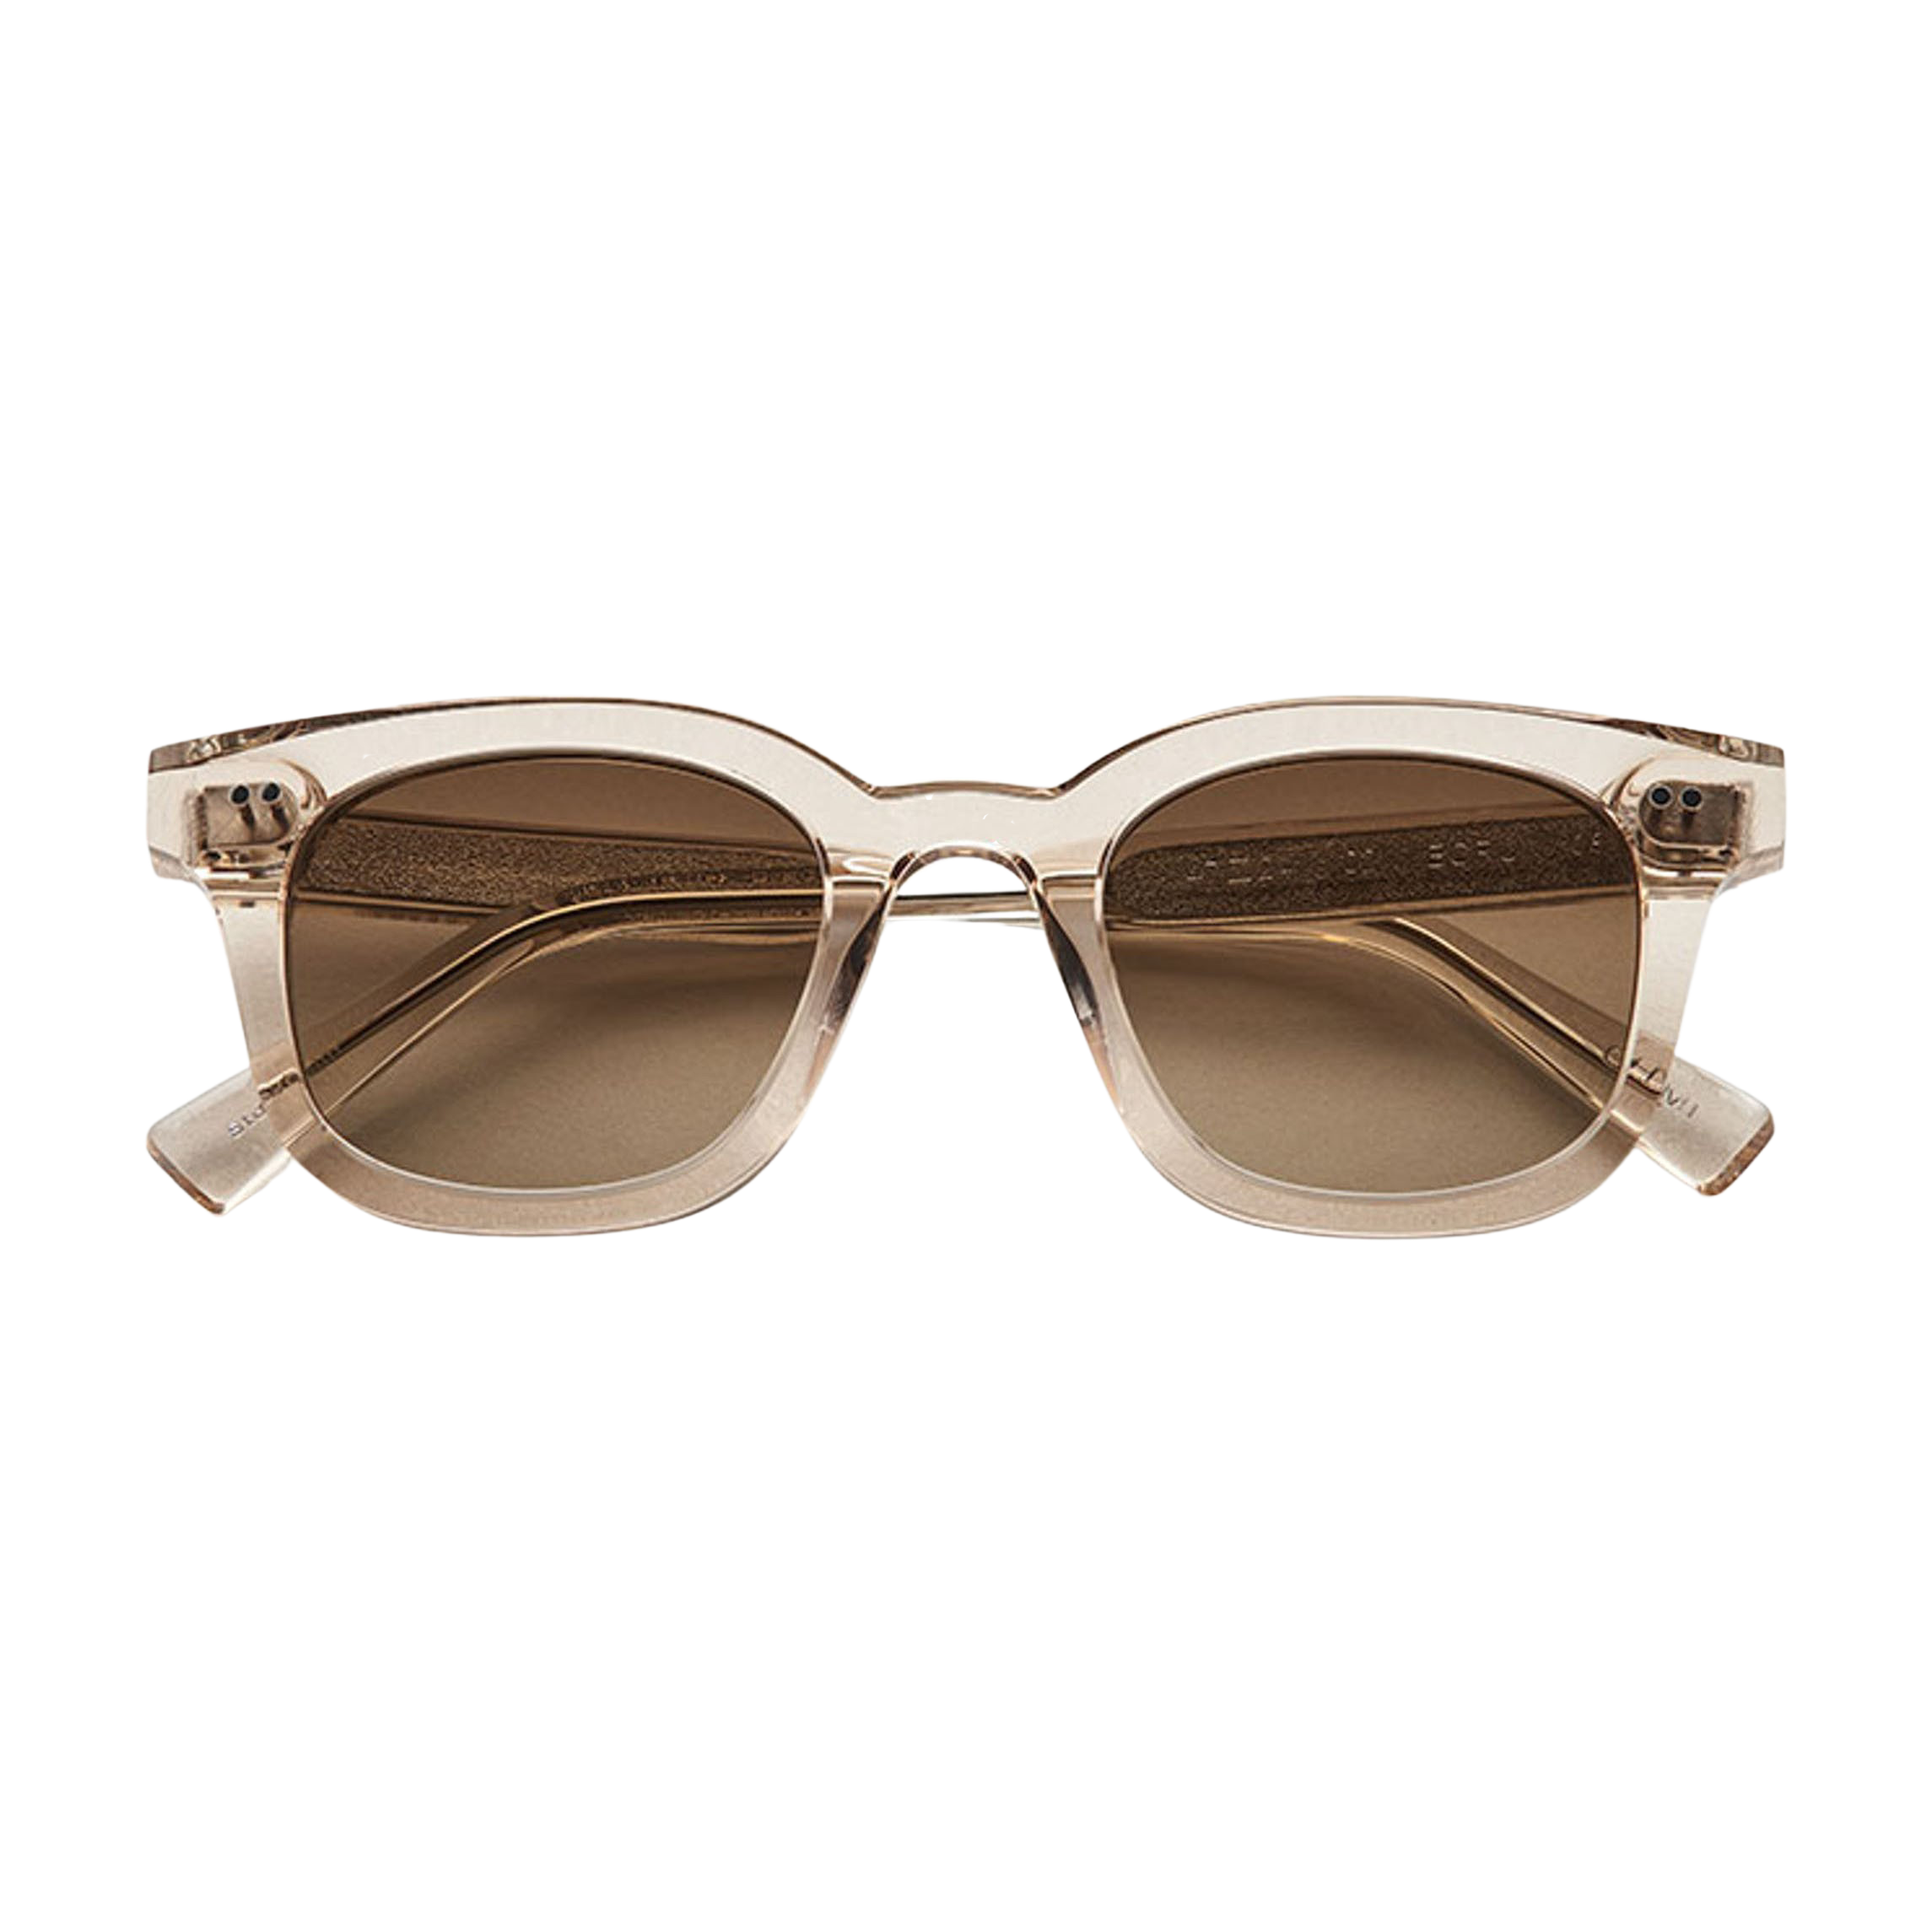 passe Leeds had Chimi Eyewear - Model 02 Ecru Gradient Lenses Sunglasses 47mm | Baltzar